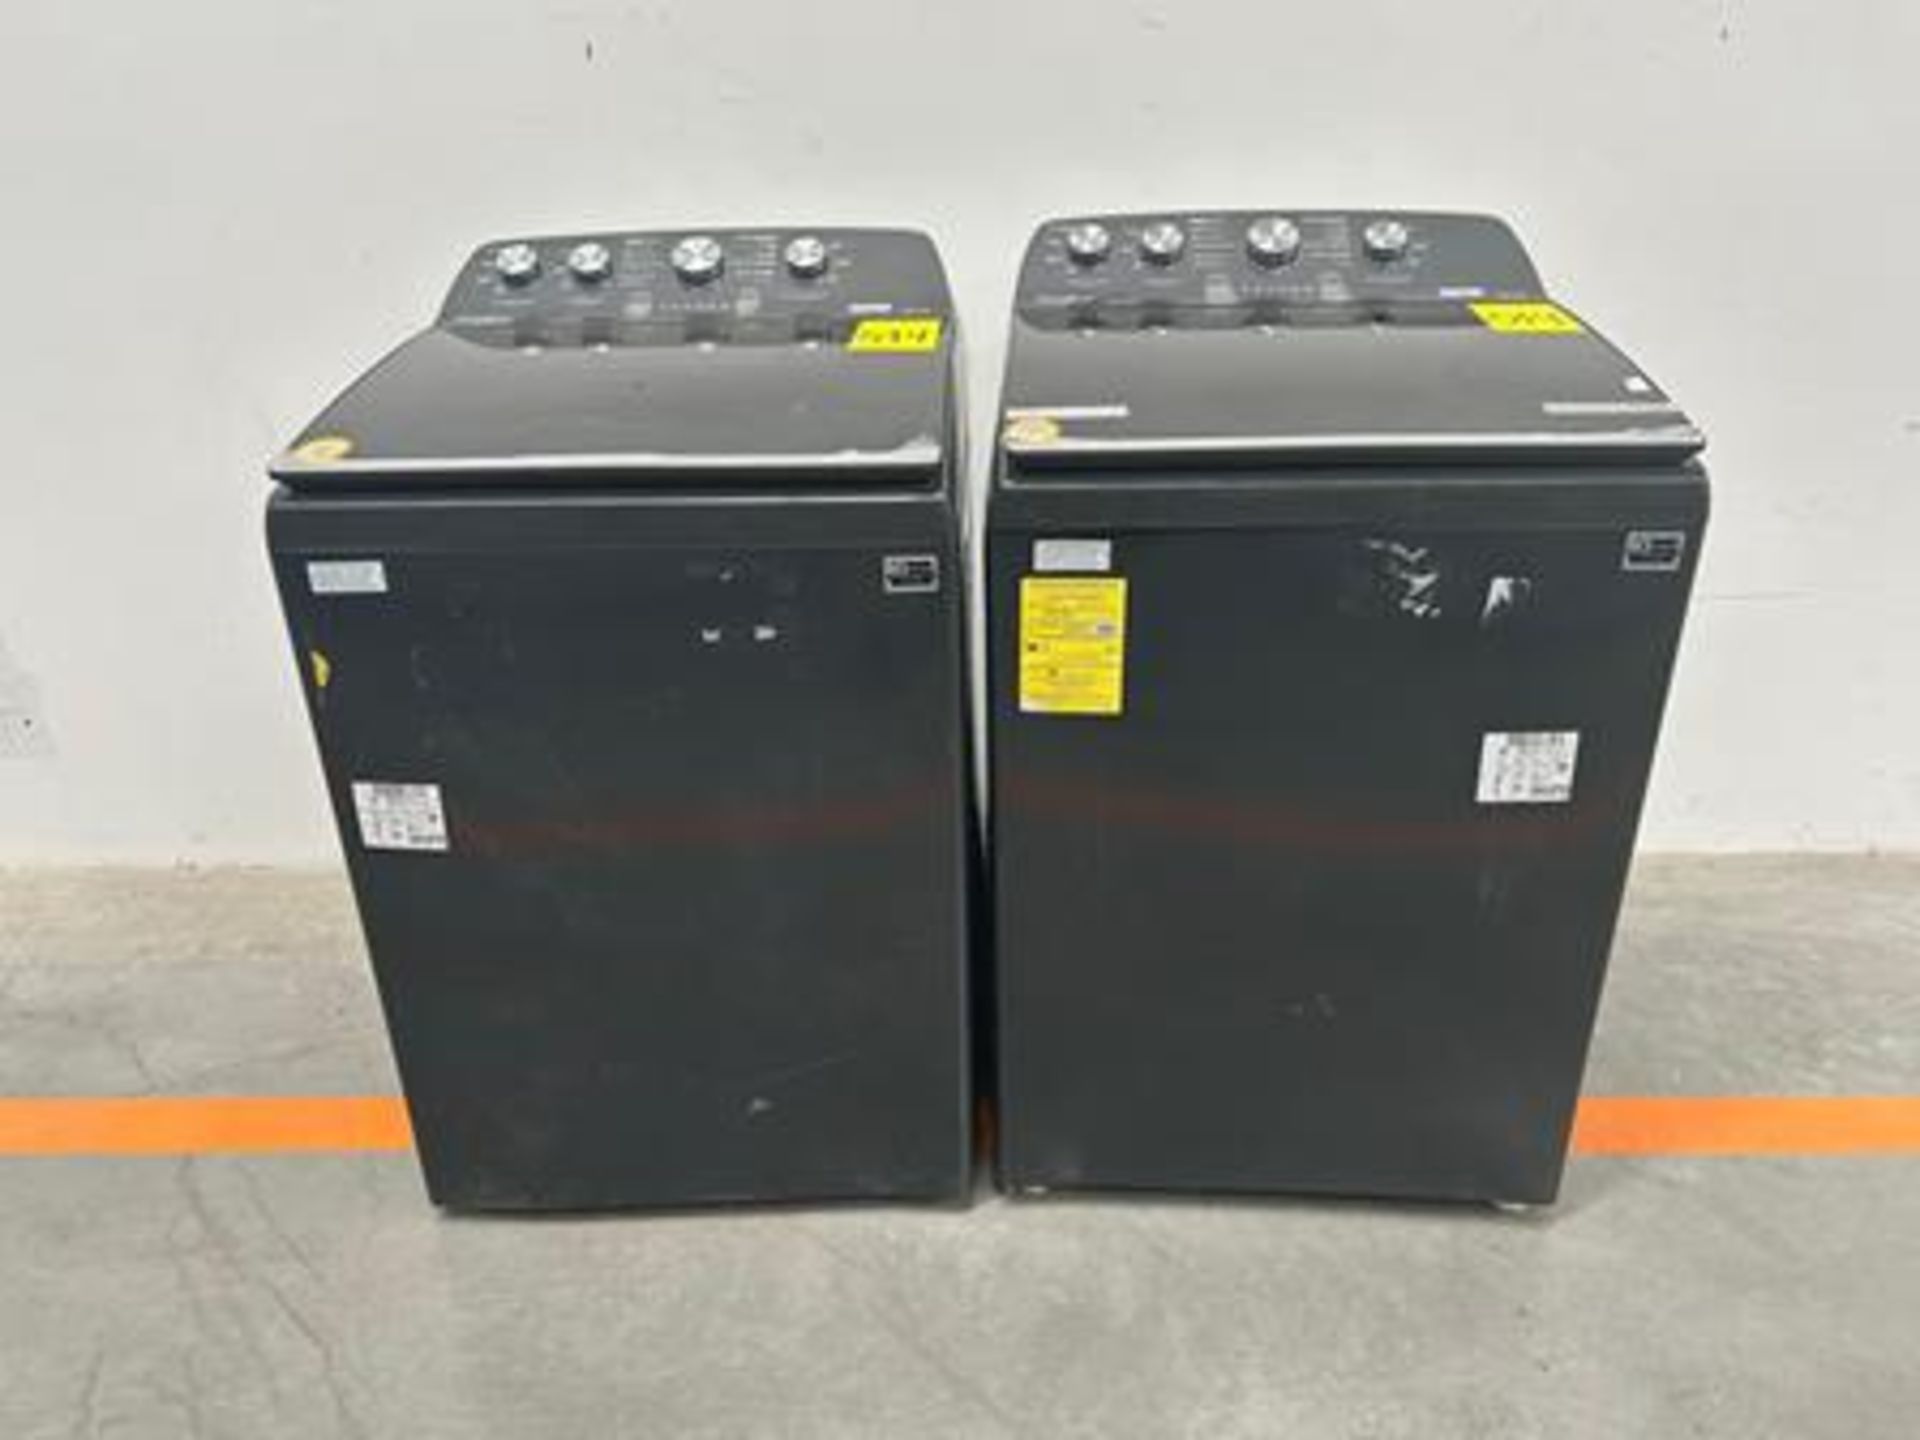 Lote de 2 lavadoras, Contiene: 1 lavadora de 20 Kg Marca WHIRLPOOL, Modelo 8MWTW2024WLG0, Serie 197